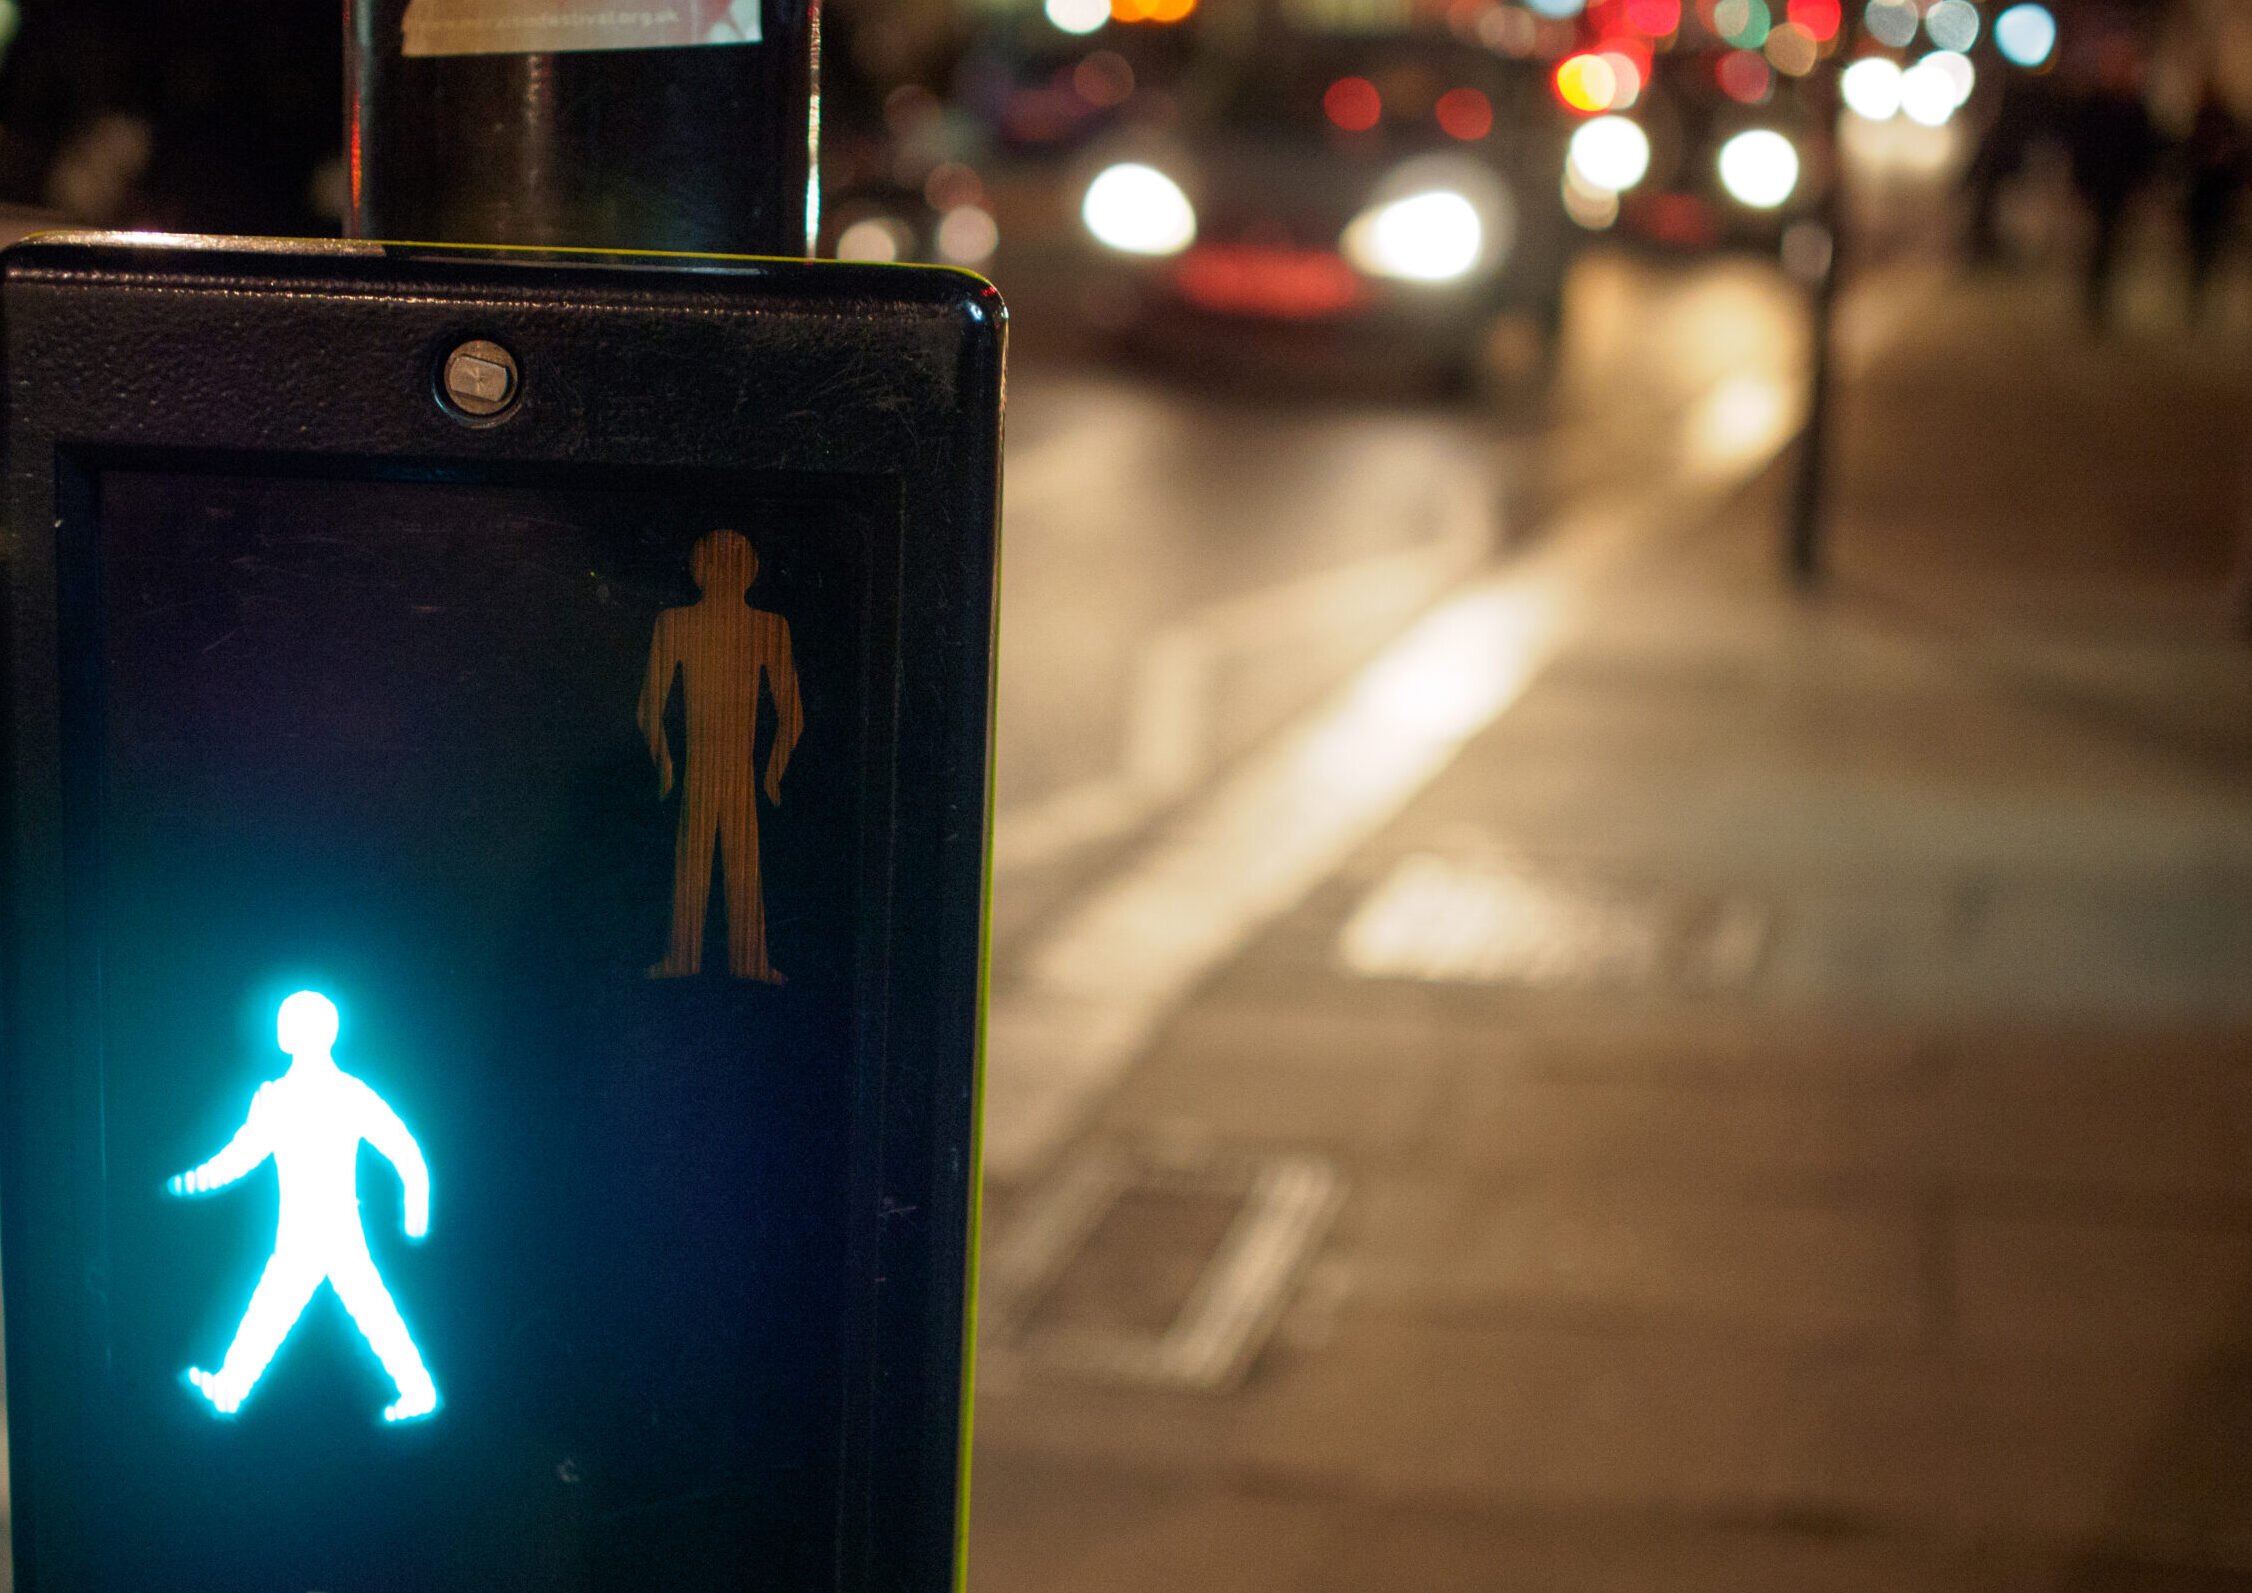 Pedestrian priority traffic signals